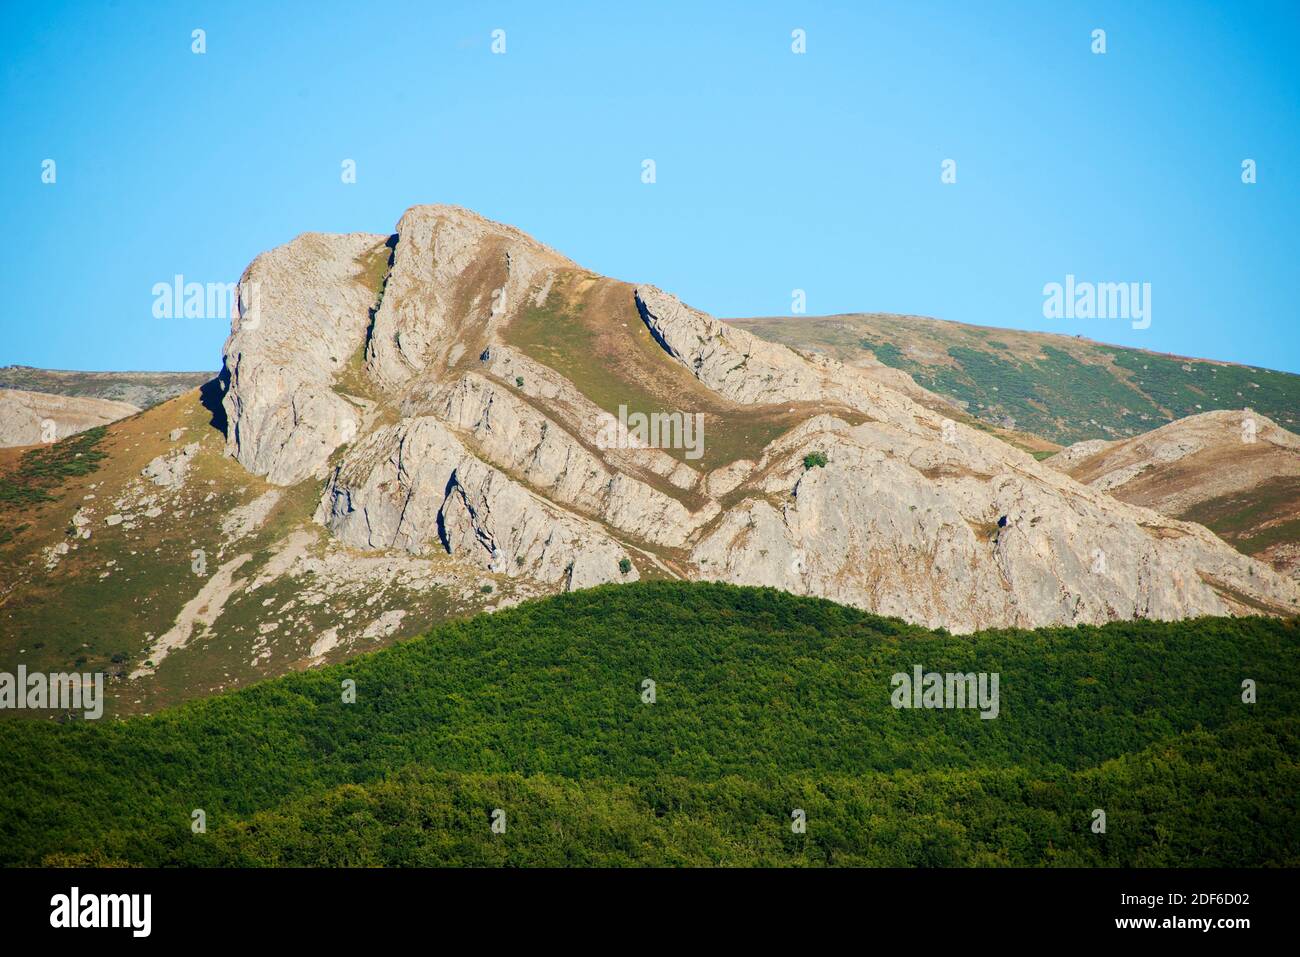 Invertiertes Relief oder invertierte Topographie mit Synklinalfalte. Cordillera Cantabrica, Valle de Redondo, Palencia, Castilla y Leon, Spanien. Stockfoto